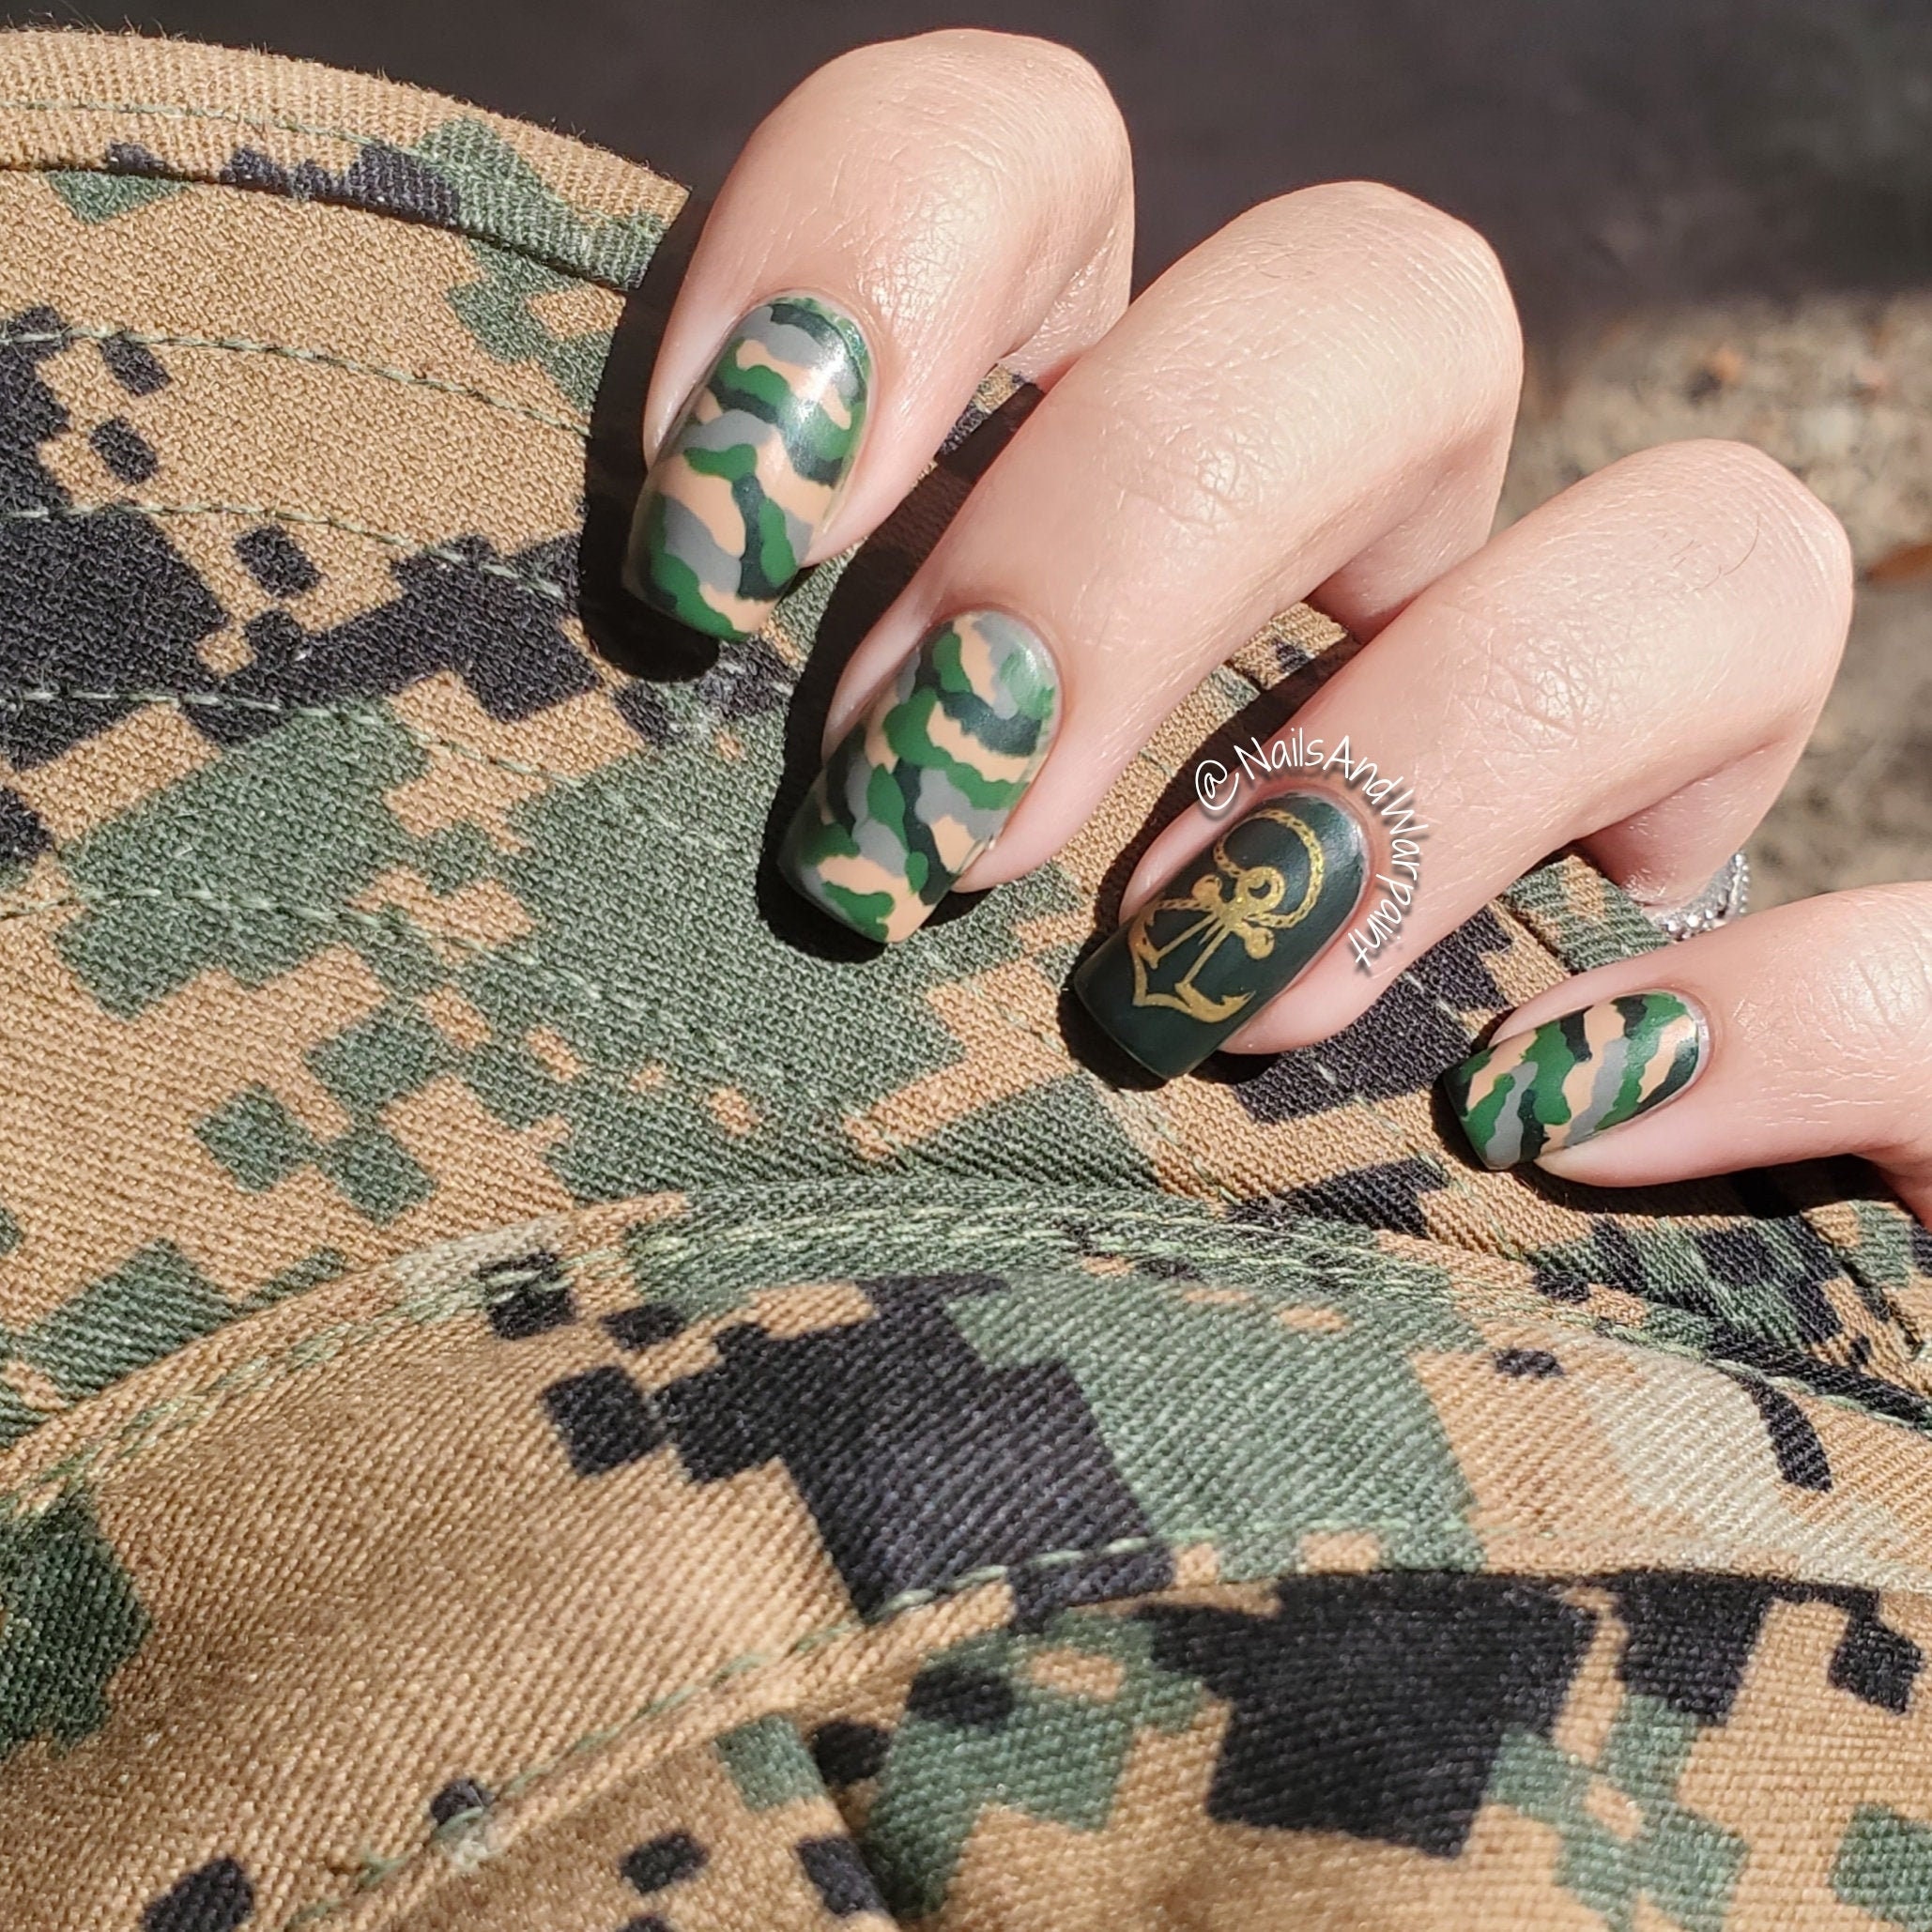 Nail art militaire| army nail art - YouTube